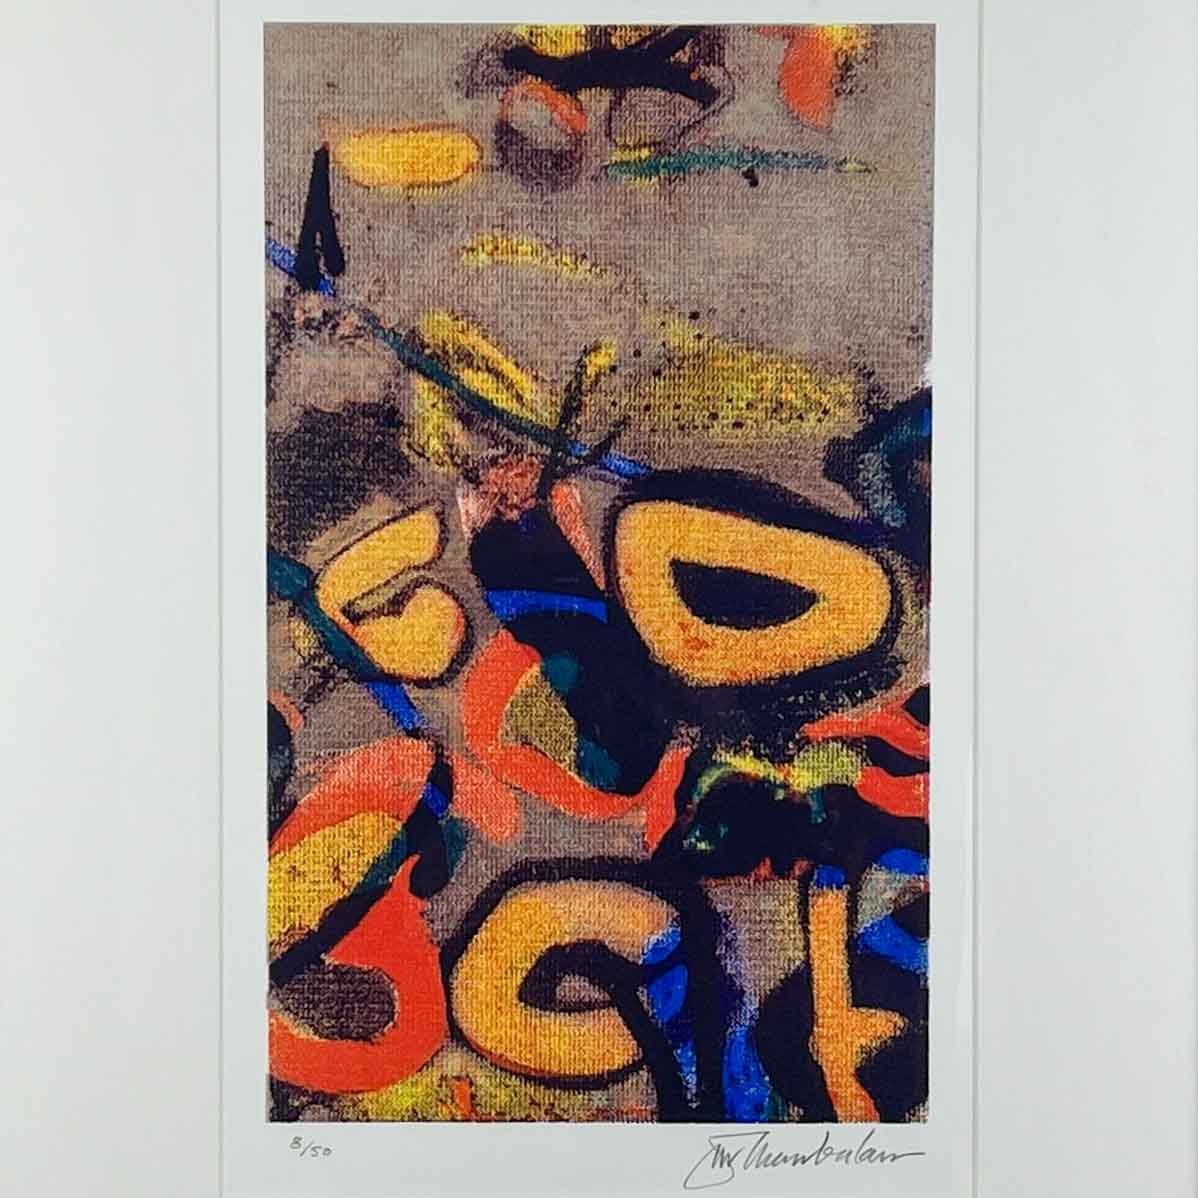 John Chamberlain - "Bozo" - Silkscreen 1990, professionally framed